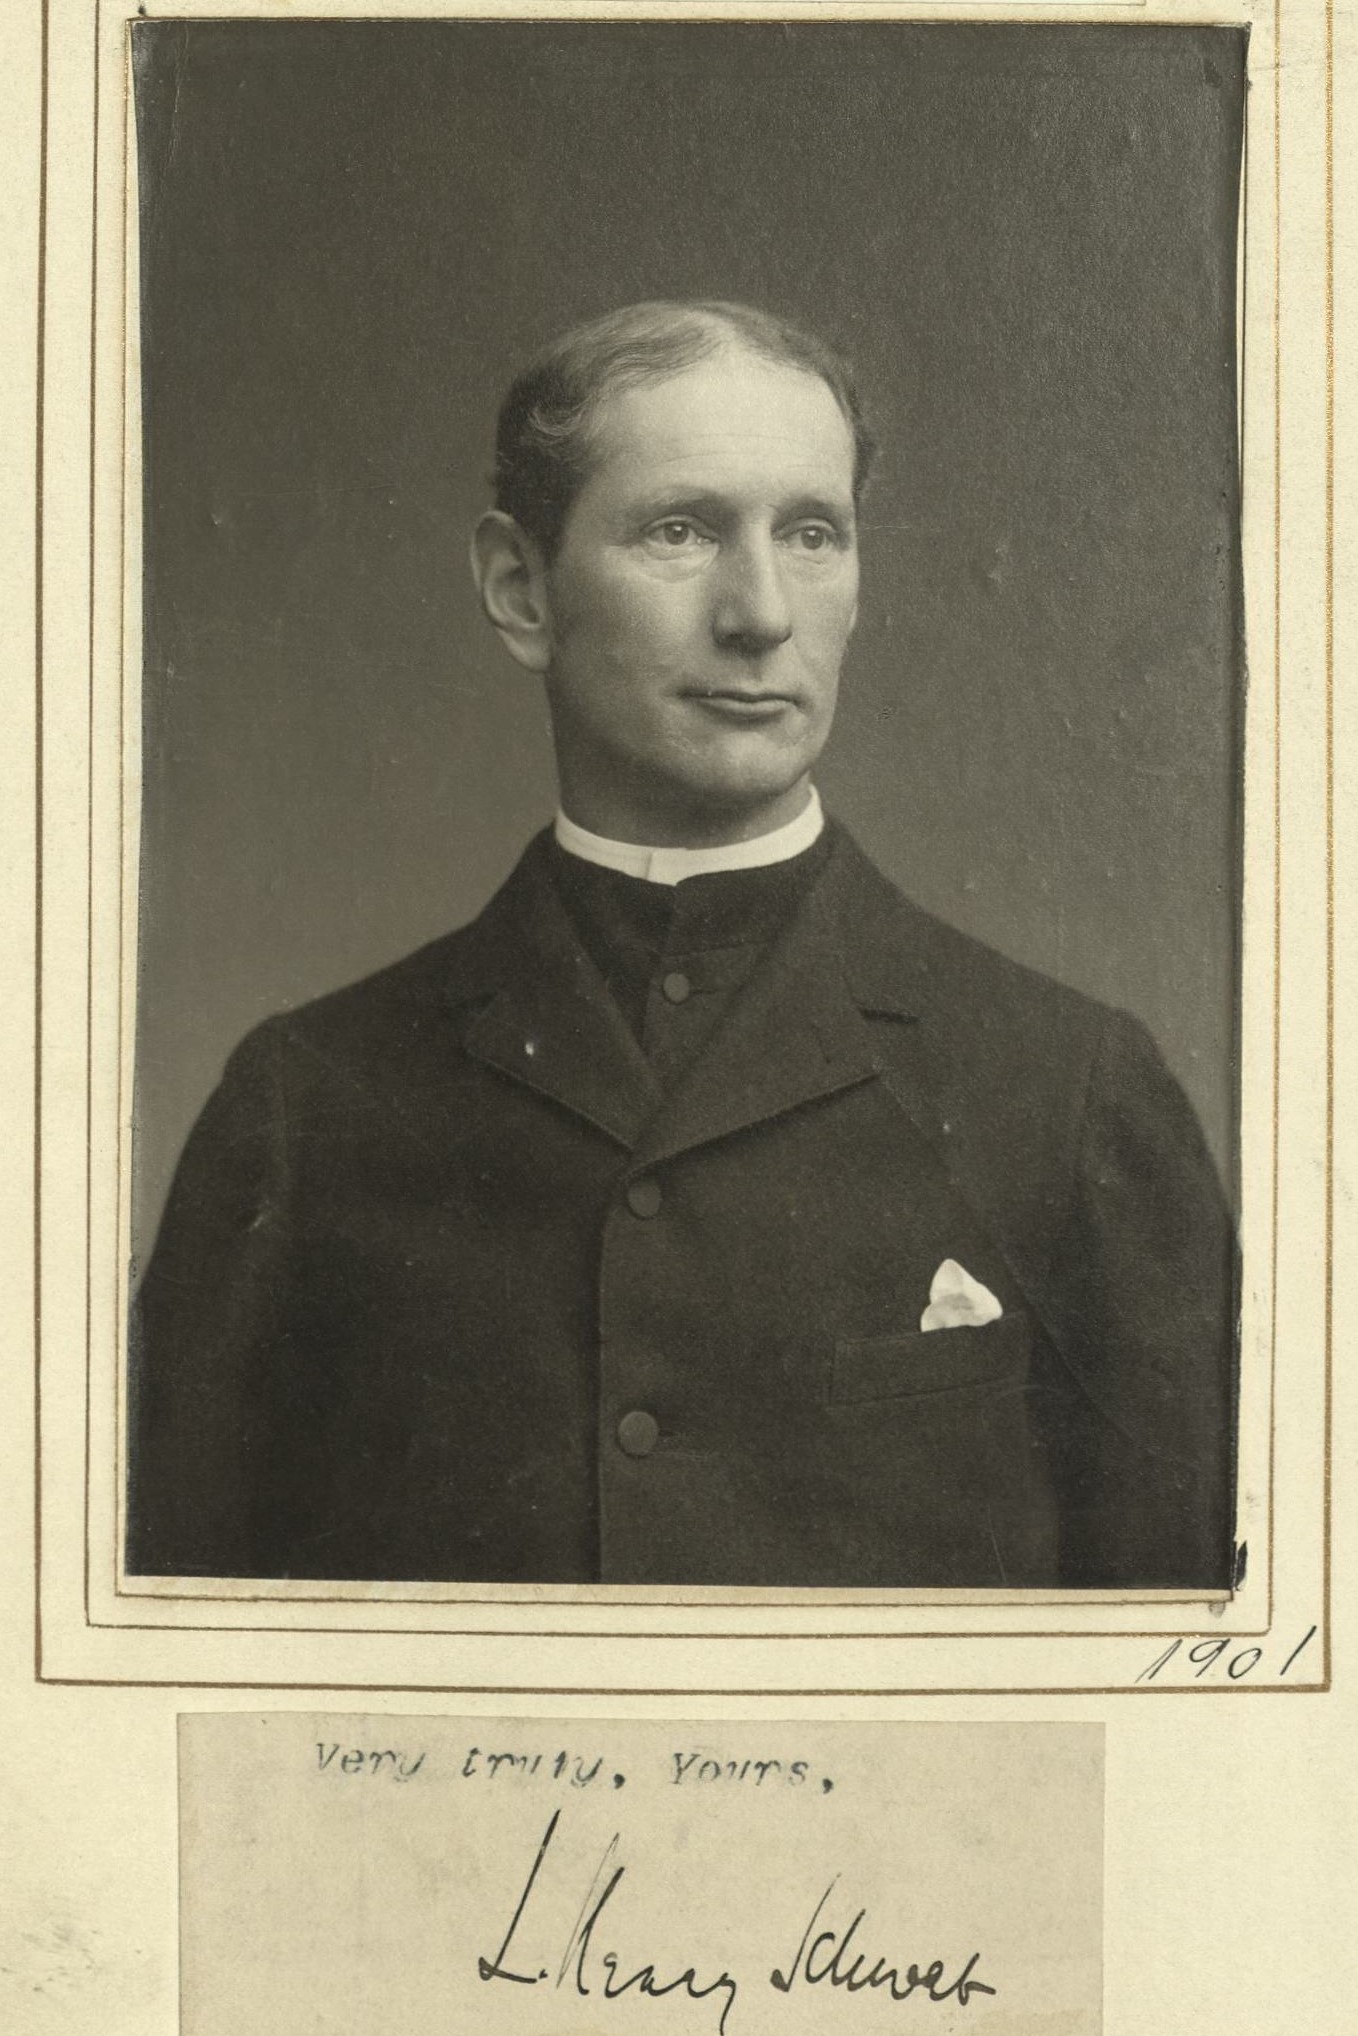 Member portrait of L. Henry Schwab